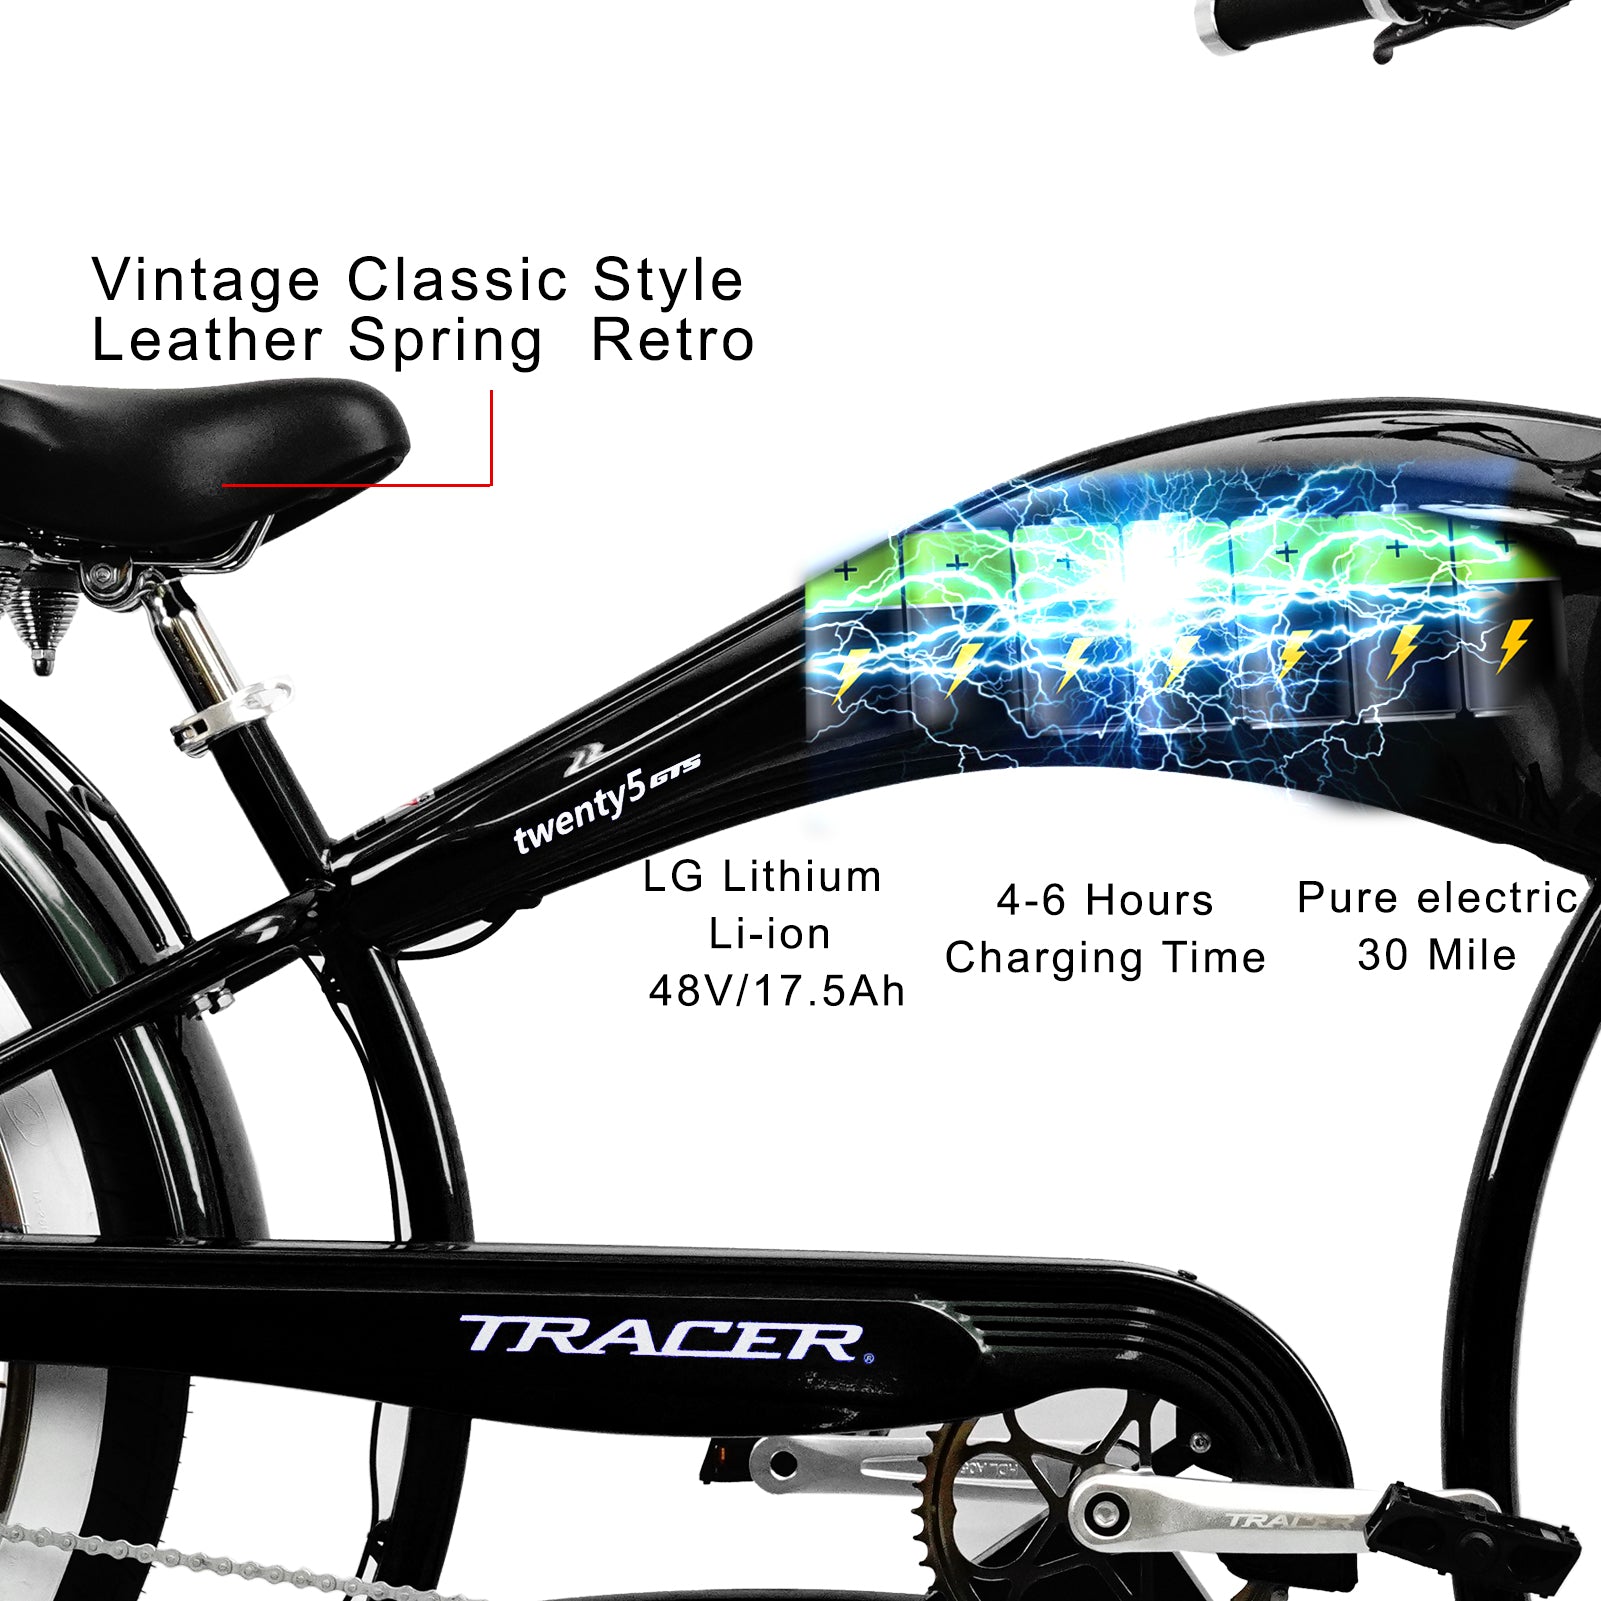 Tracer Twenty5 GTS 500W 26" Cruiser E-Bikes